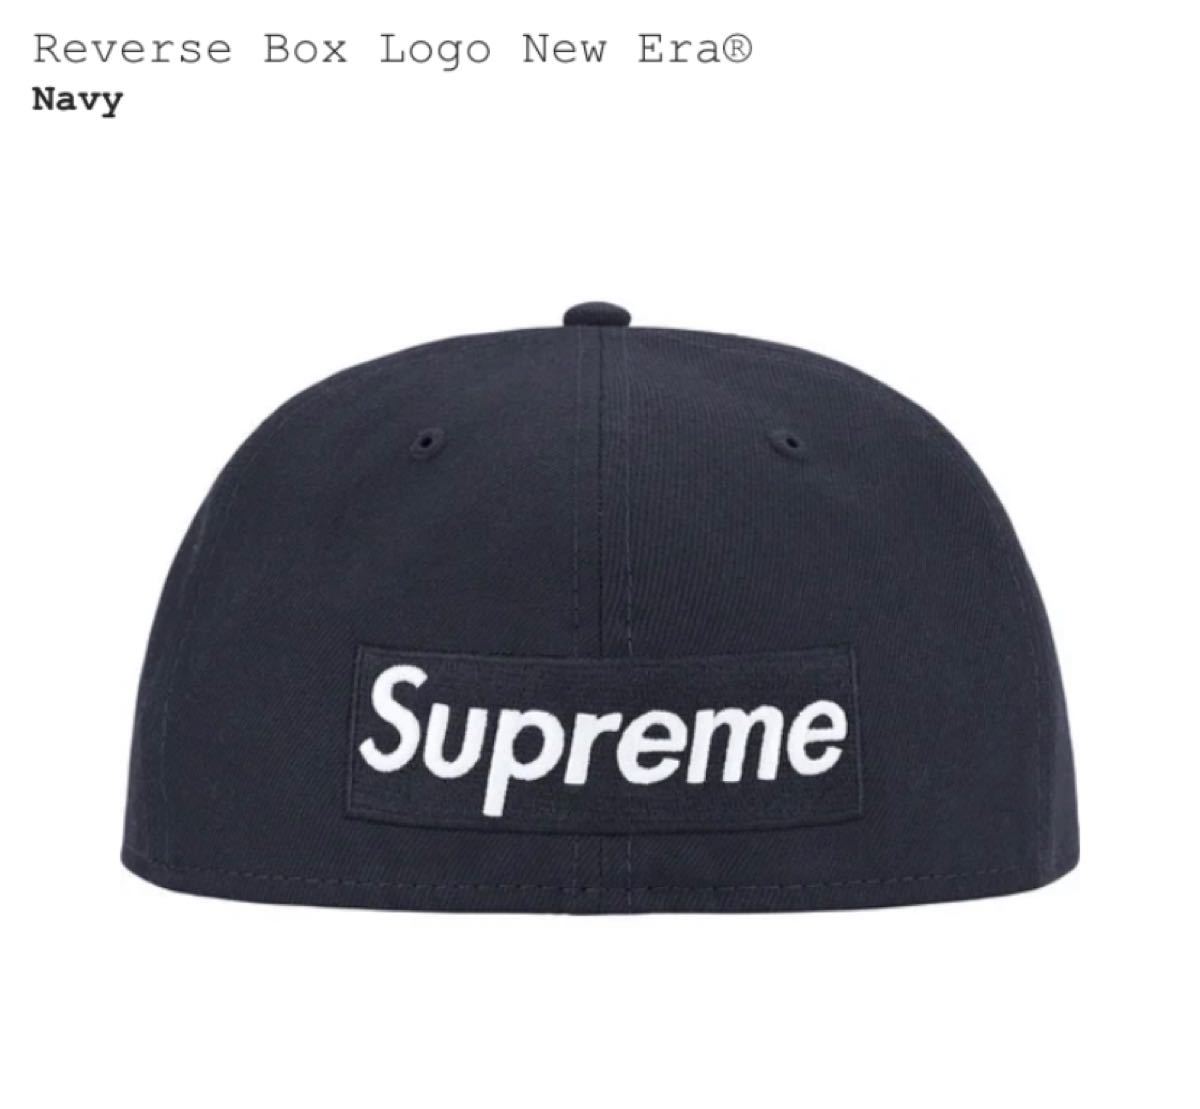 21ss Supreme / Reverse Box Logo New Era